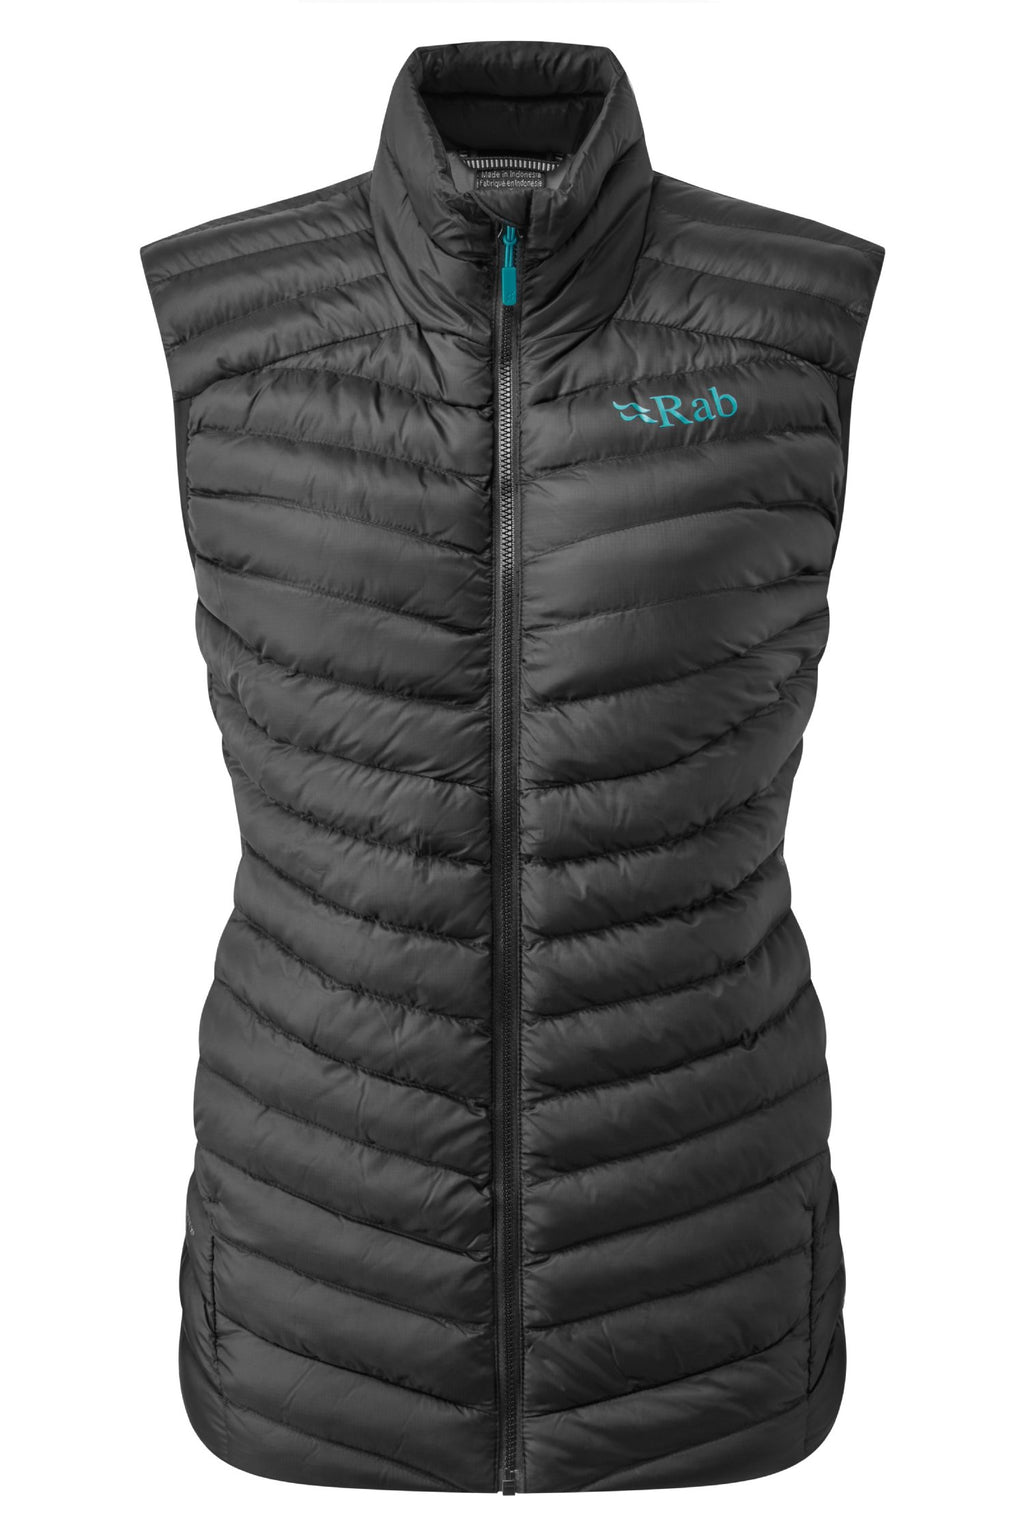 Rab Cirrus vest for Women